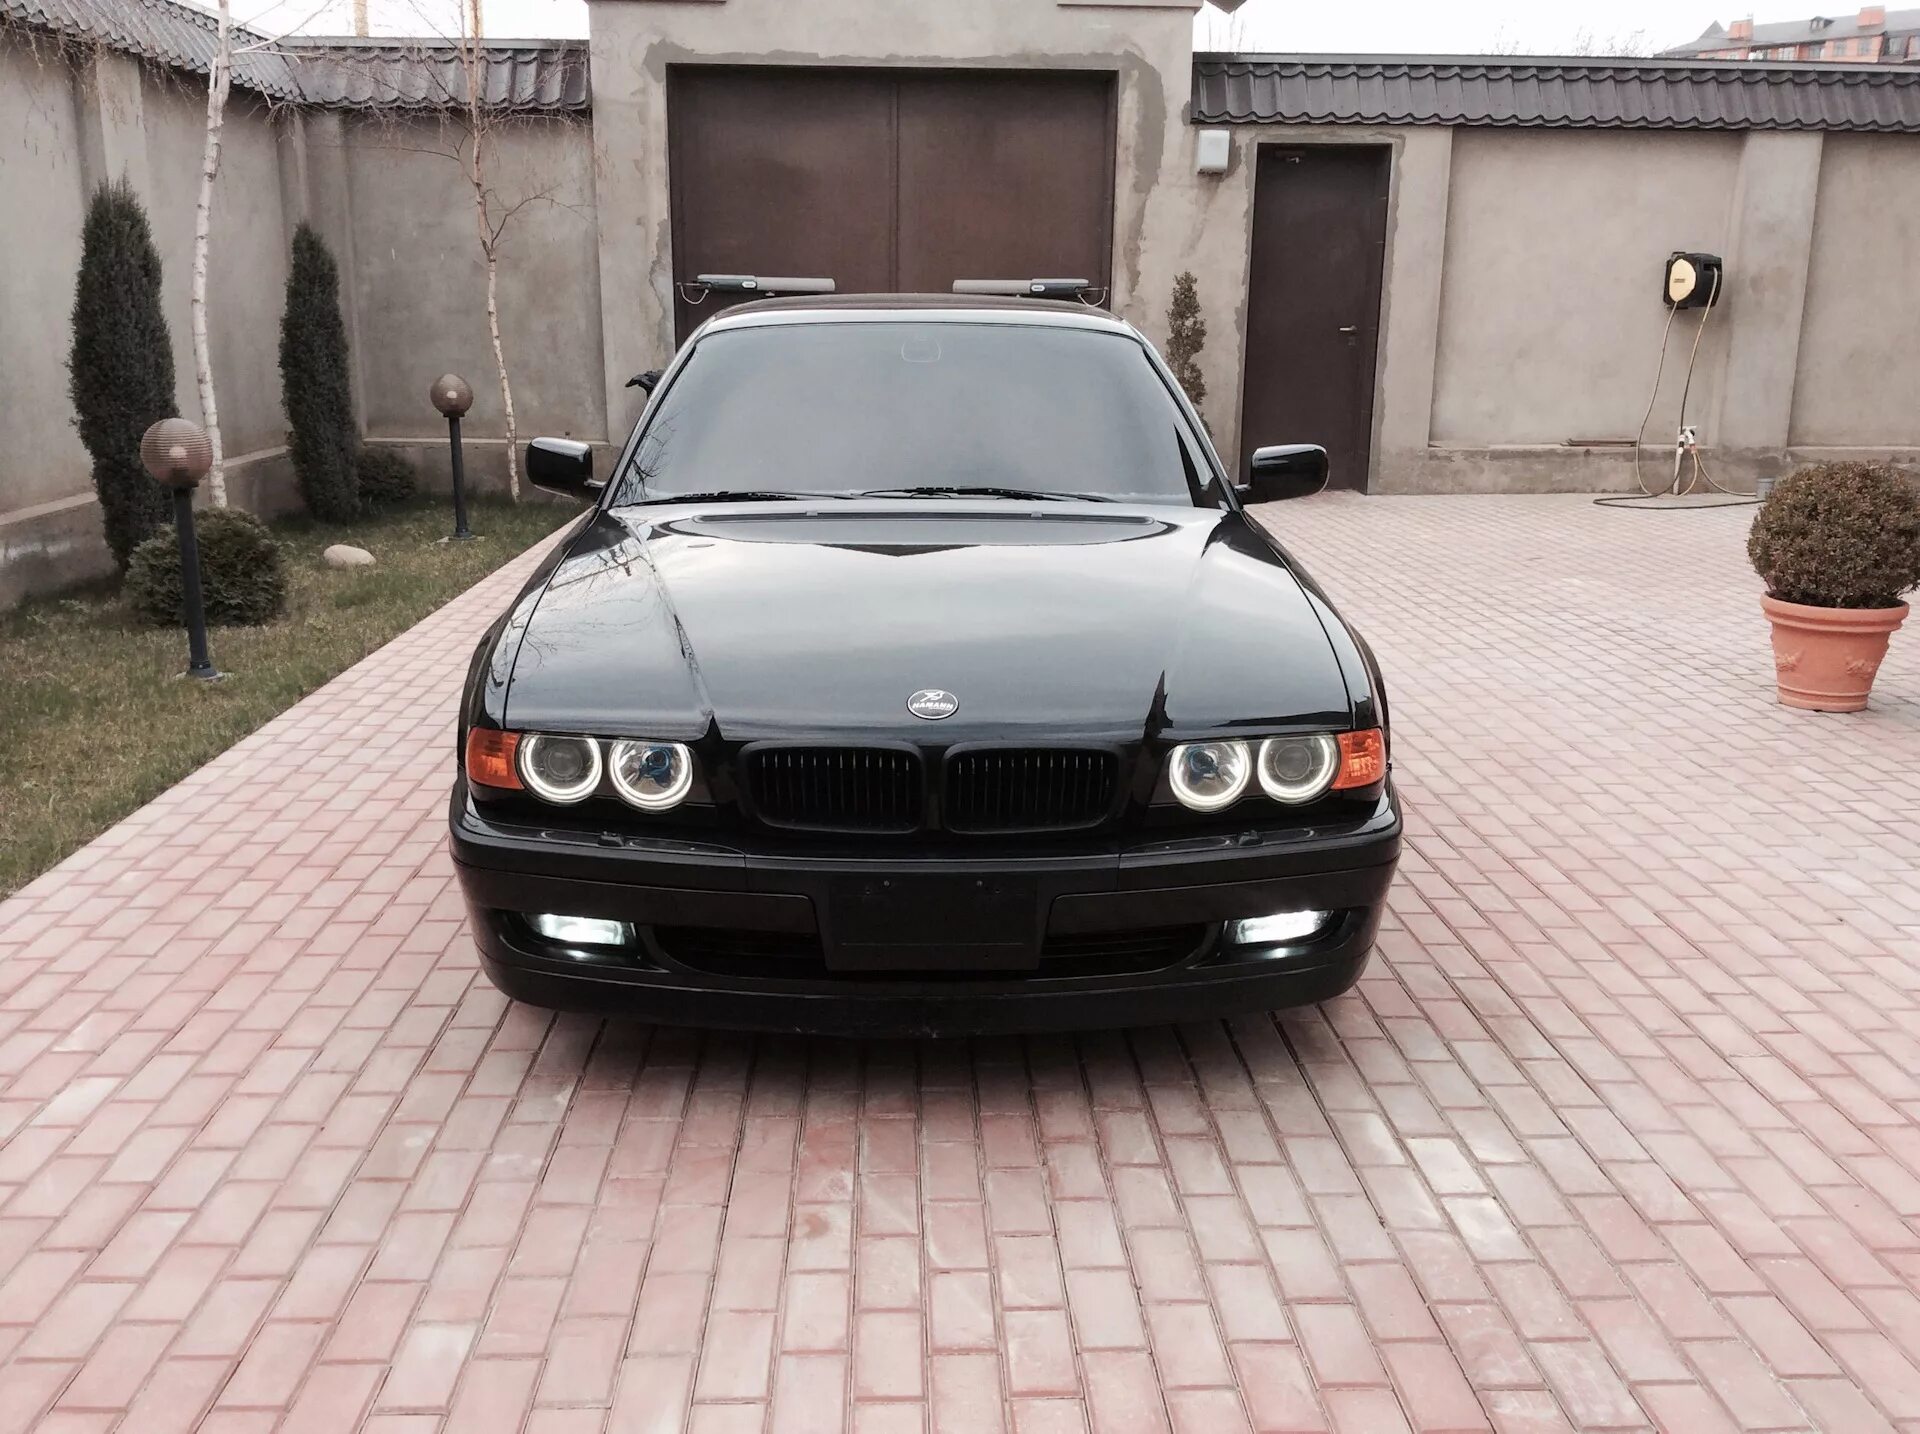 BMW 7 2001. БМВ 7 2001. БМВ 7 е38 2001. BMW 7 Series 2001.